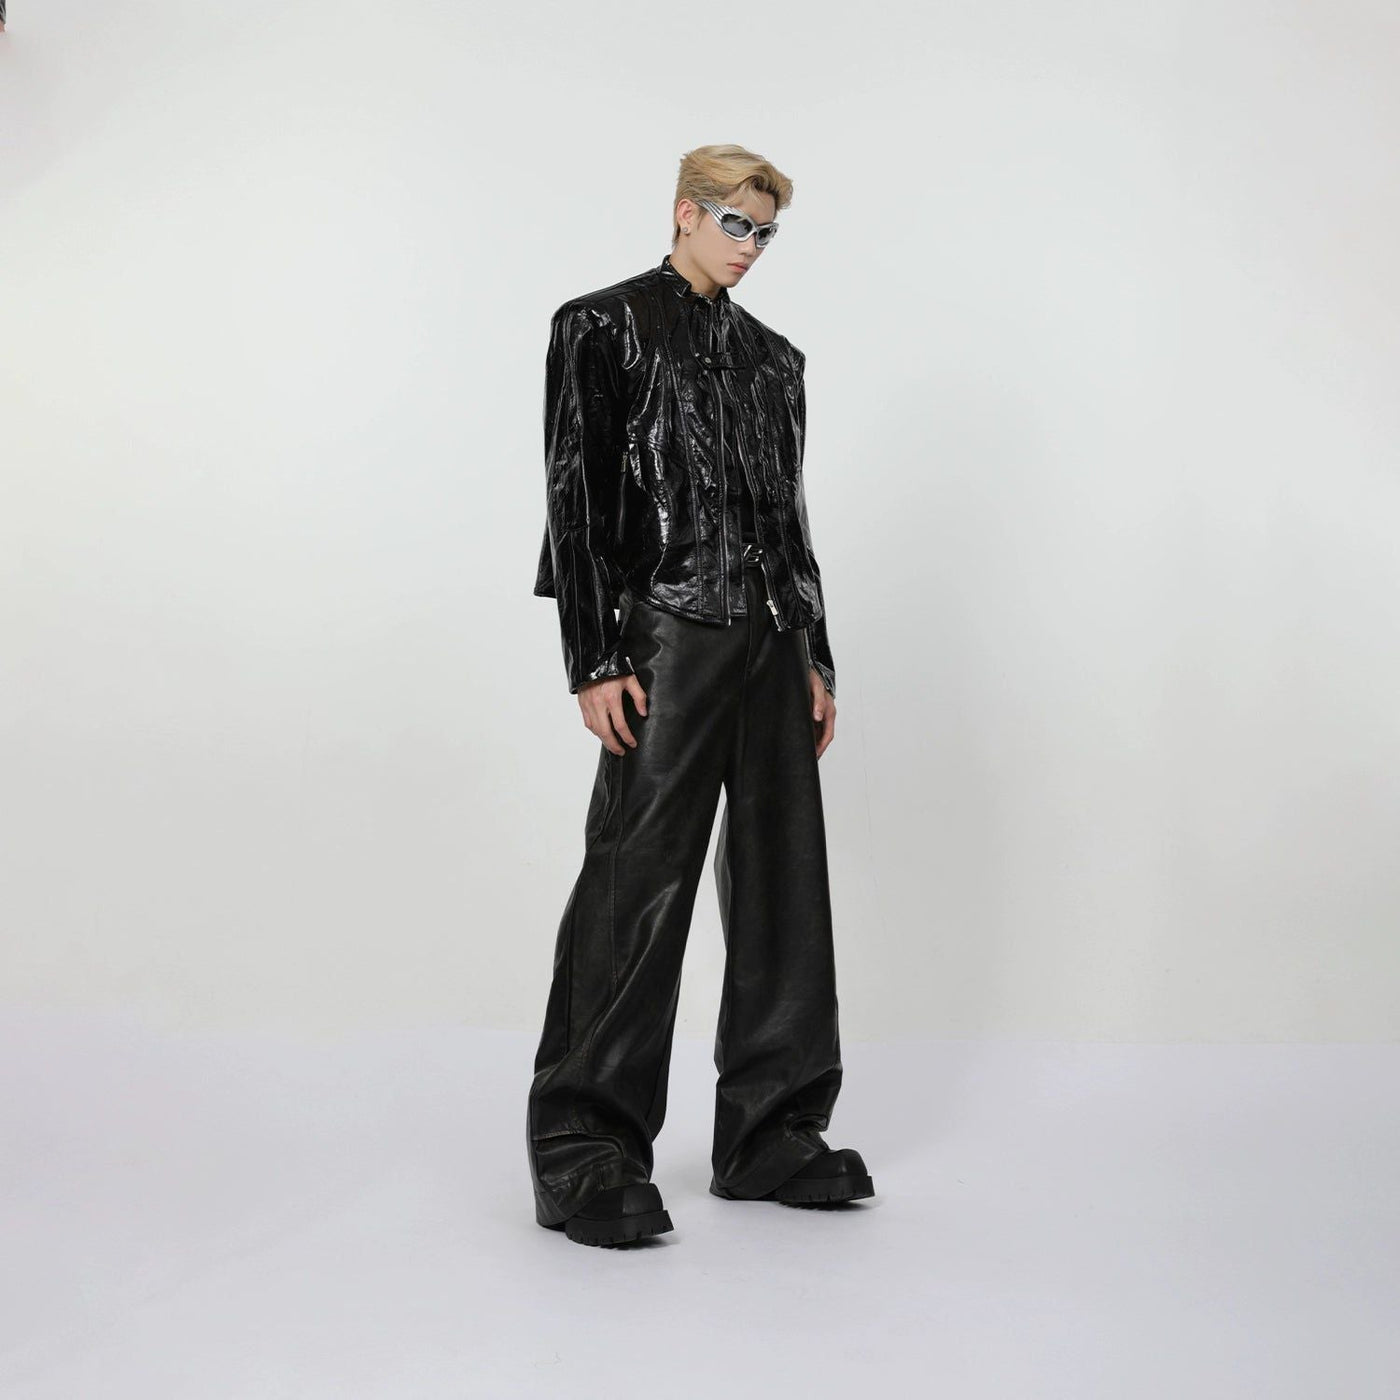 Metallic Shine Leather Jacket Korean Street Fashion Jacket By Turn Tide Shop Online at OH Vault